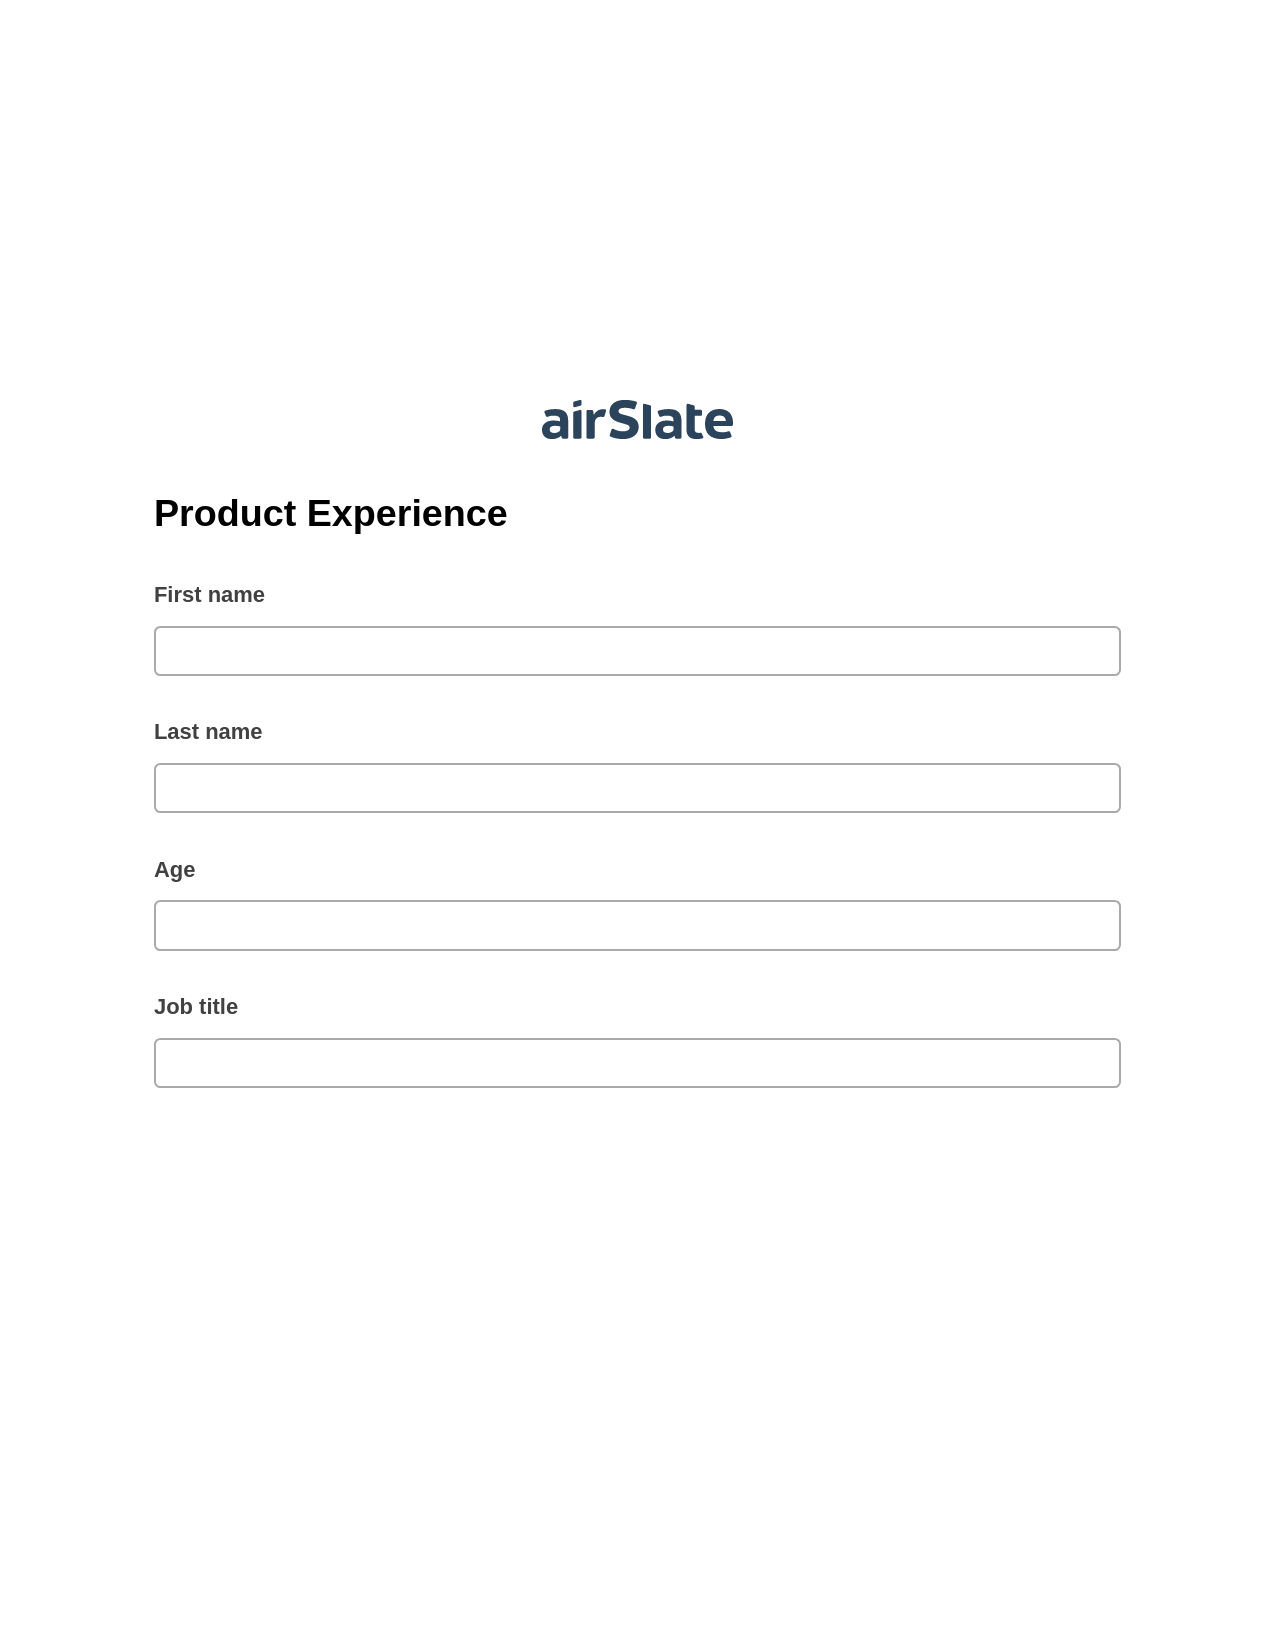 Product Experience Pre-fill from Google Sheets Bot, SendGrid send Campaign bot, Slack Notification Postfinish Bot